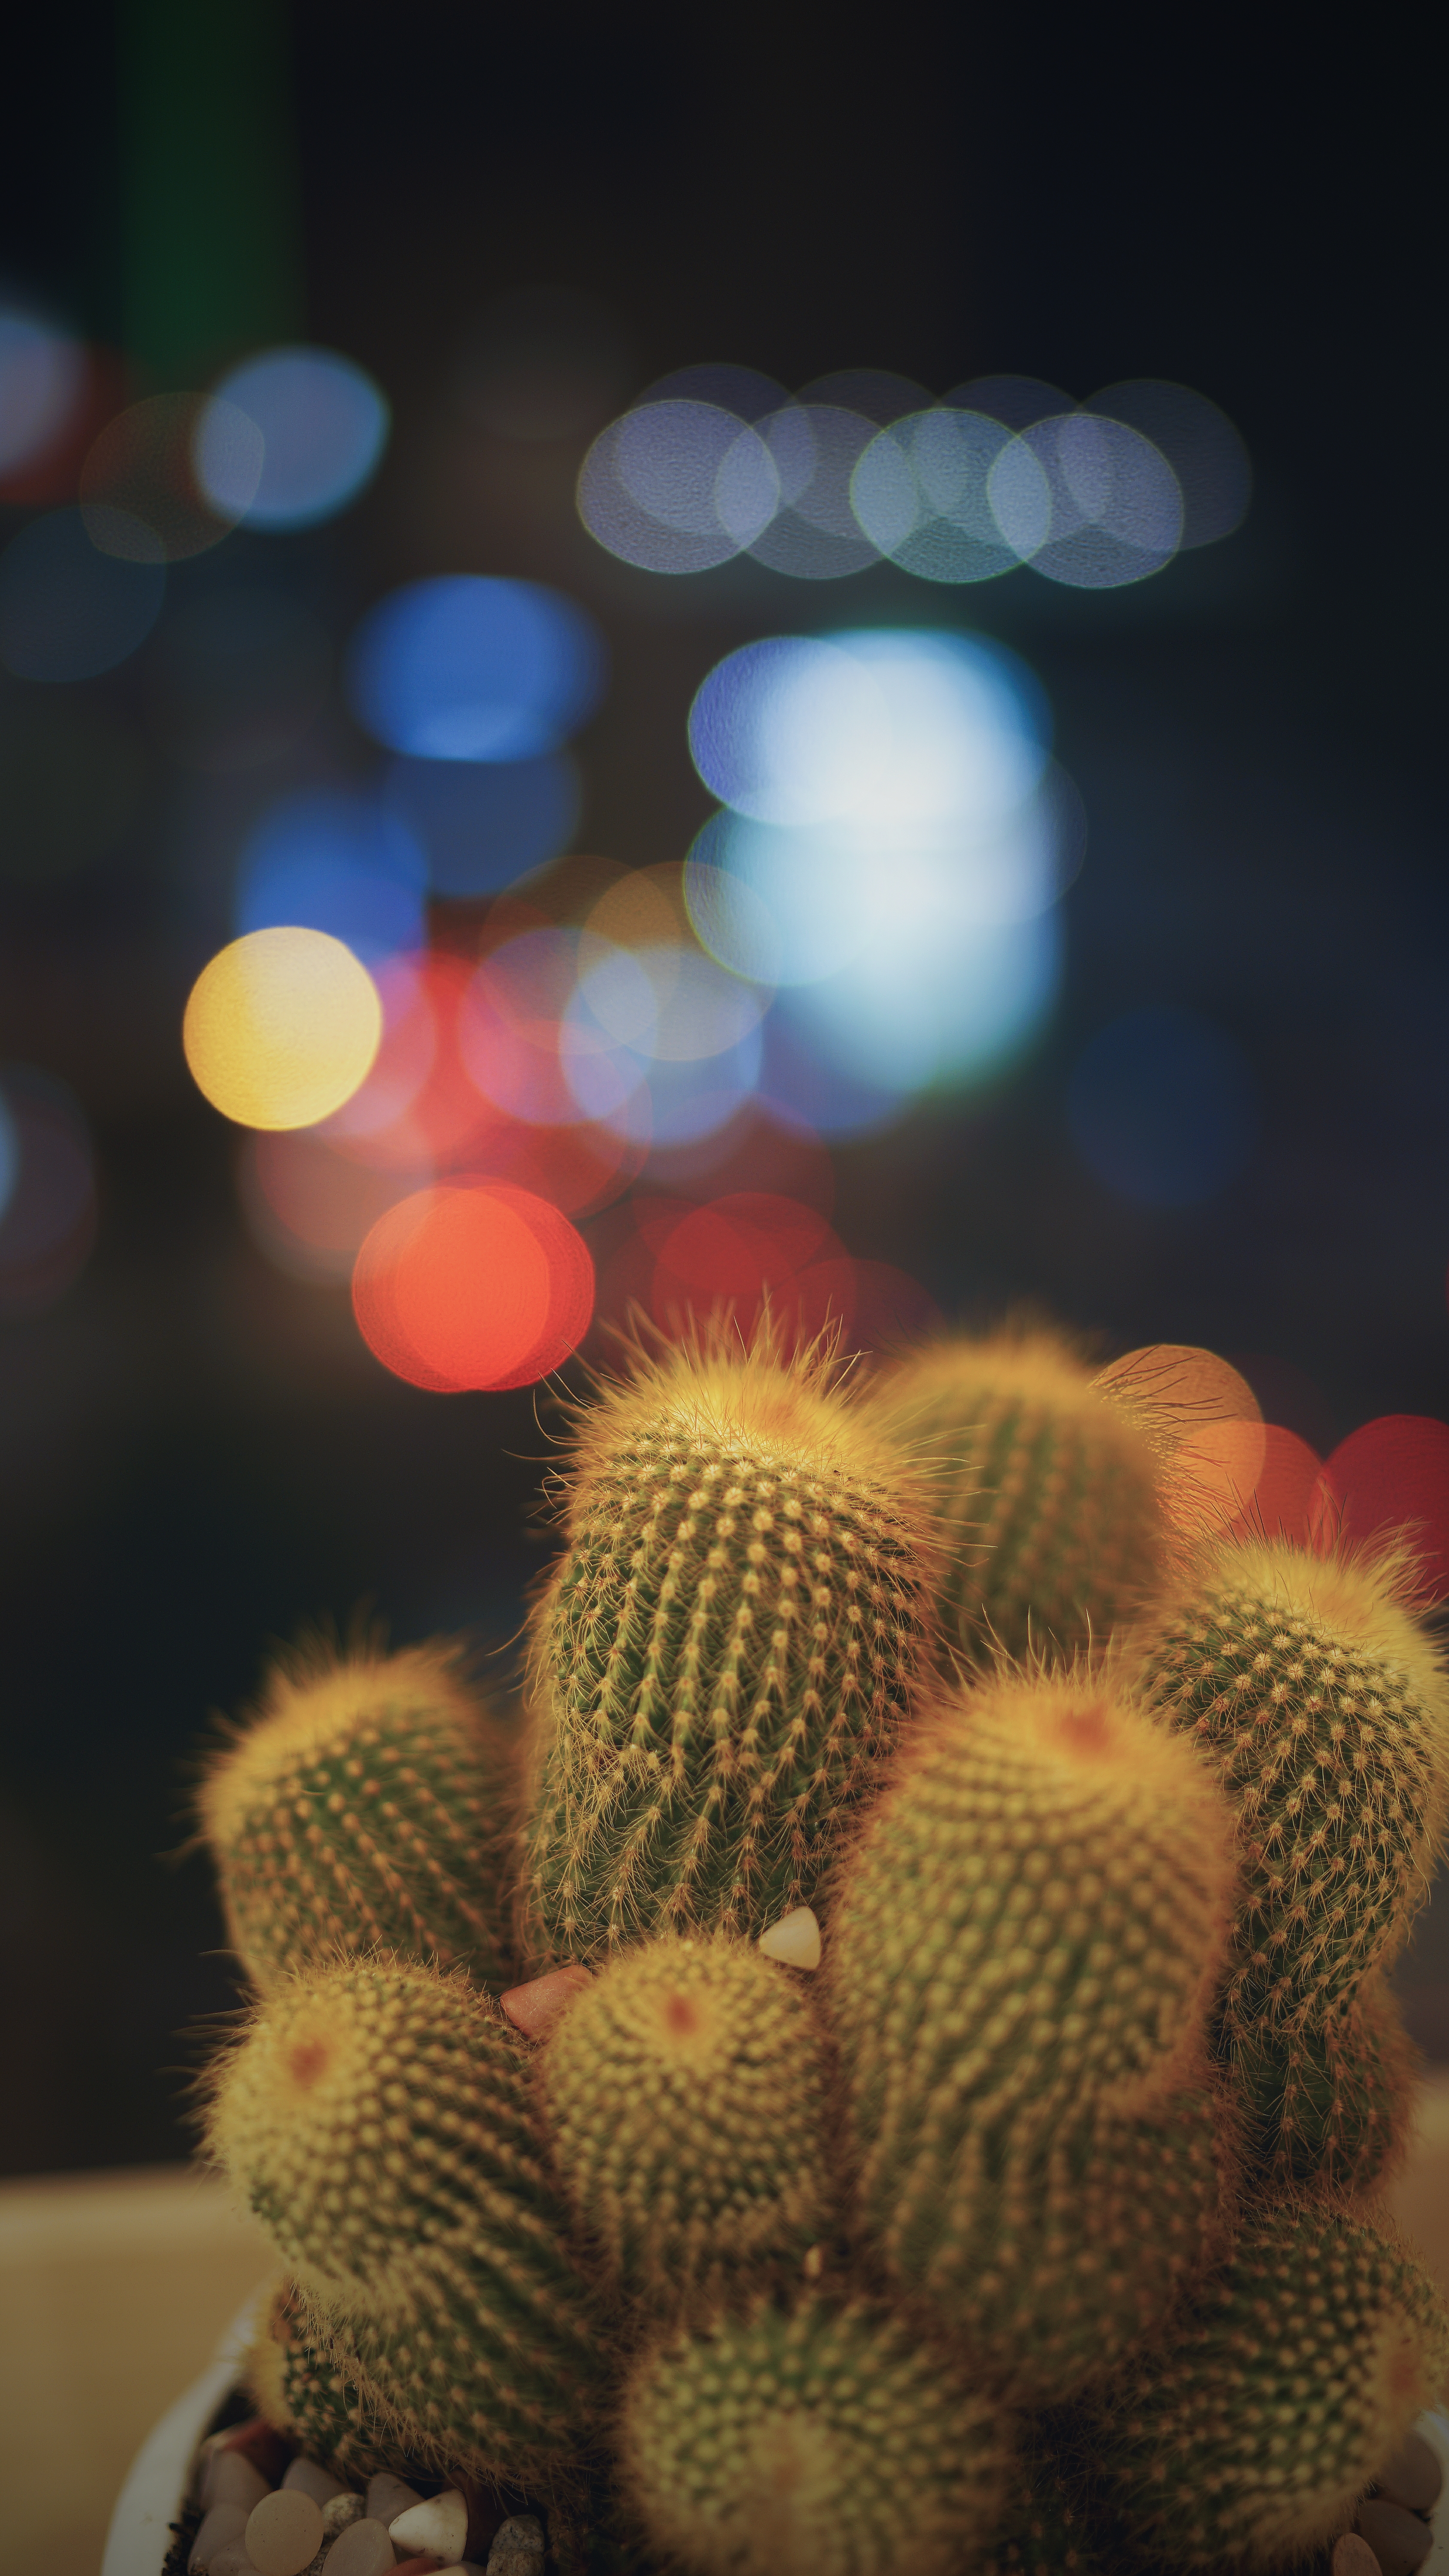 67418 descargar imagen cactus, suculentas, flores, destello, deslumbramiento, mordaz, espinoso, bokeh, boquet, planta de interior, houseplant, plantas suculentas: fondos de pantalla y protectores de pantalla gratis